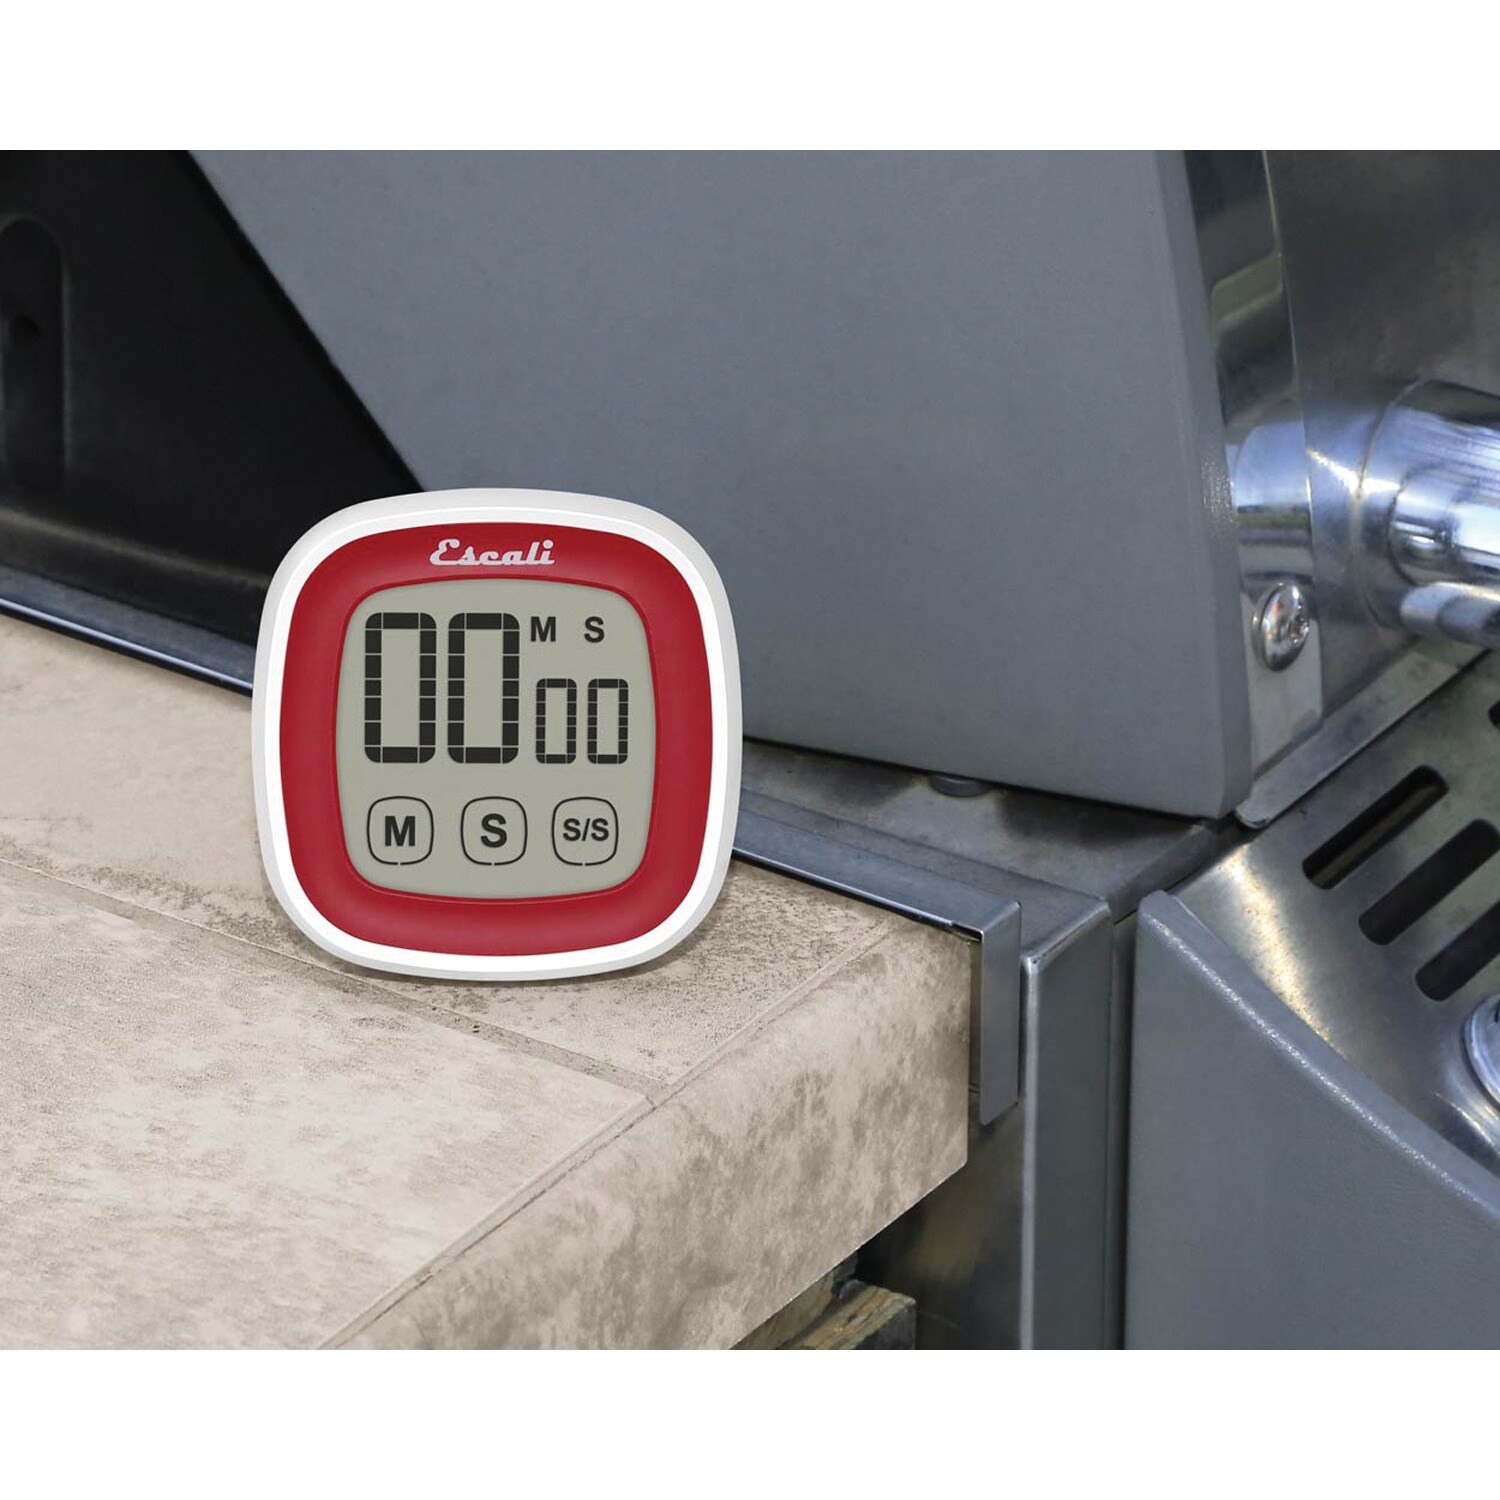 Escali Digital Refrigerator/Freezer Thermometer DHF1 - The Home Depot